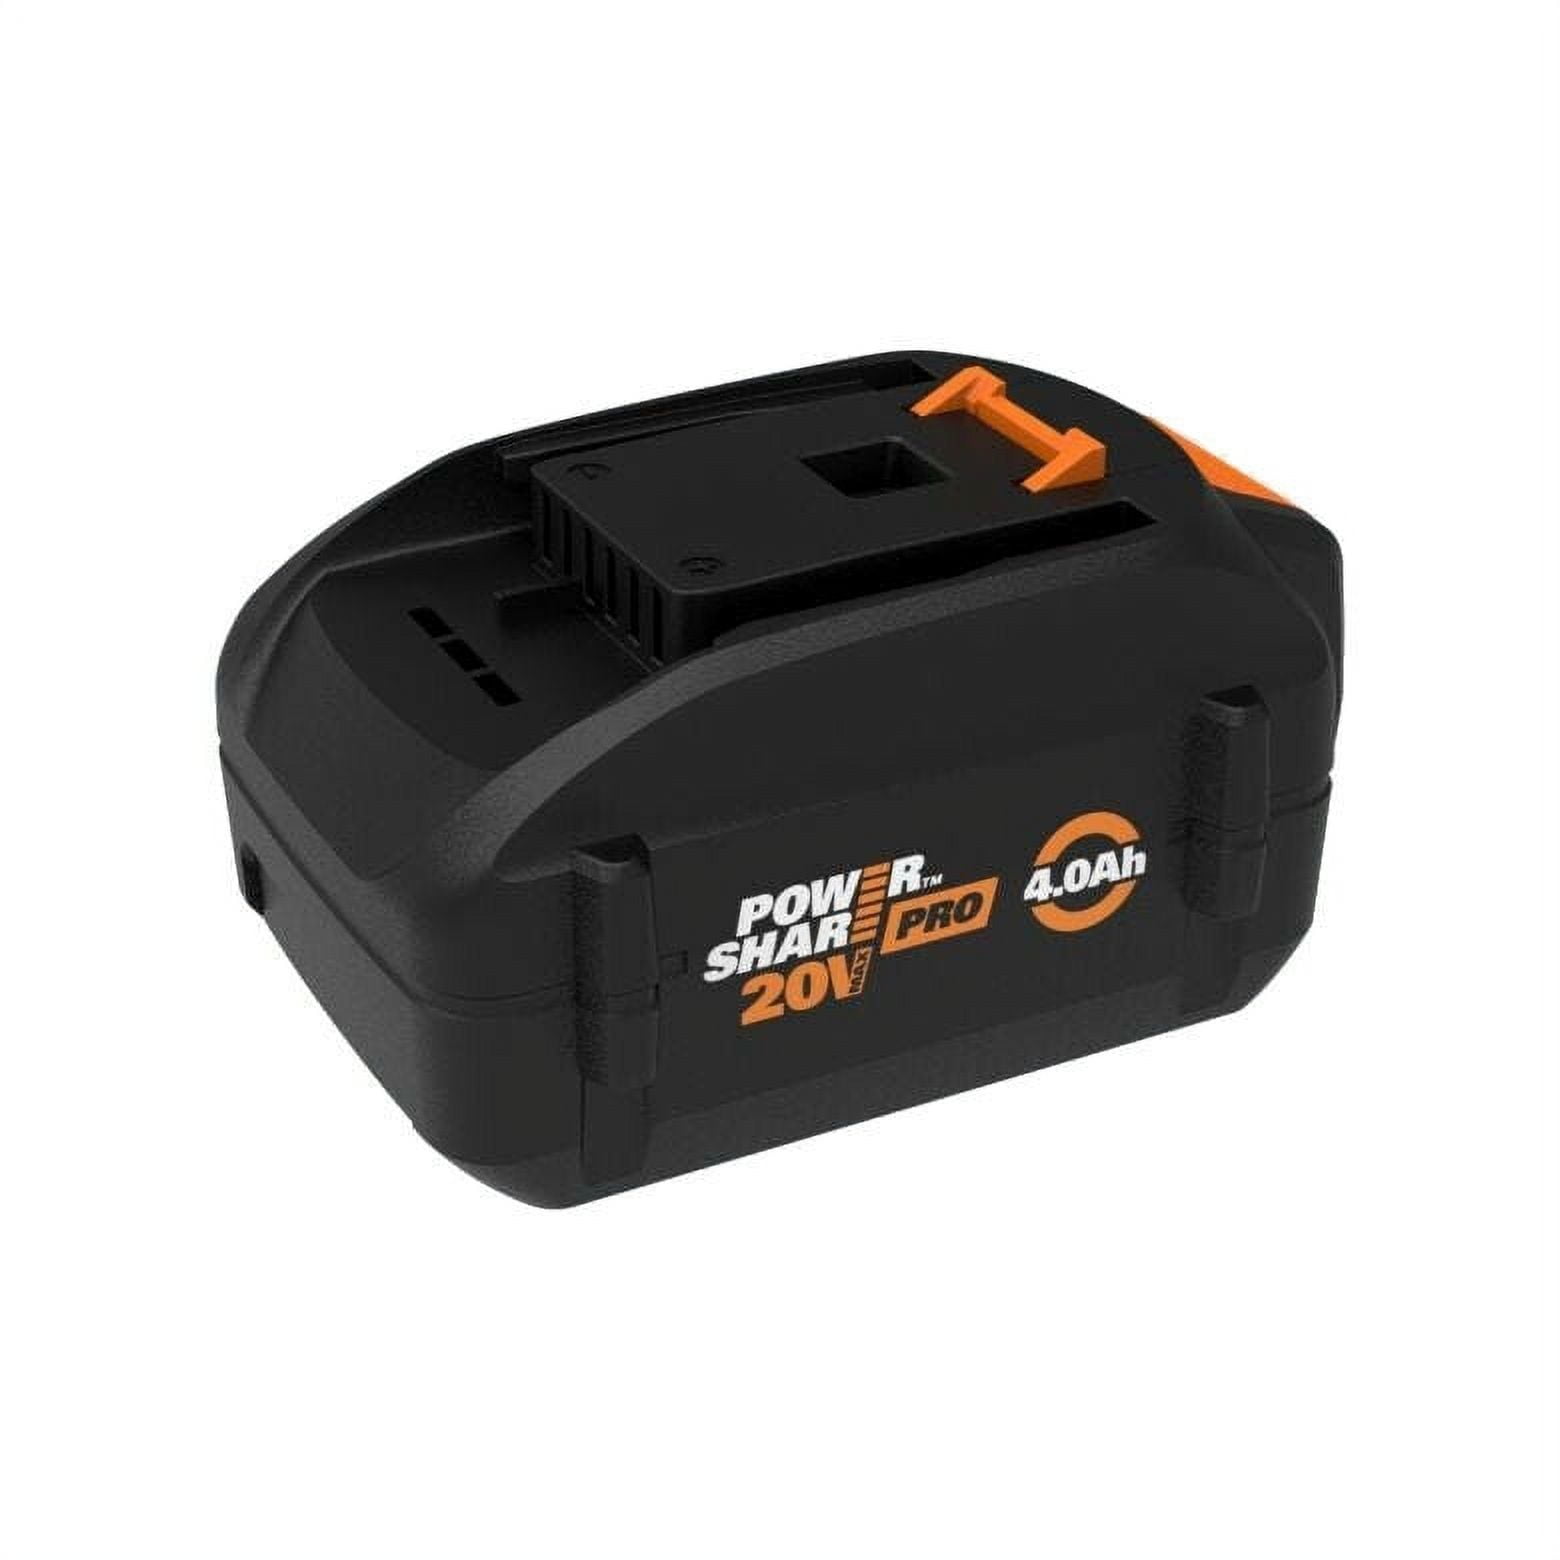 Worx 20v battery Battery Holder, Storage, Organizer, Work Shop, Pack of 6